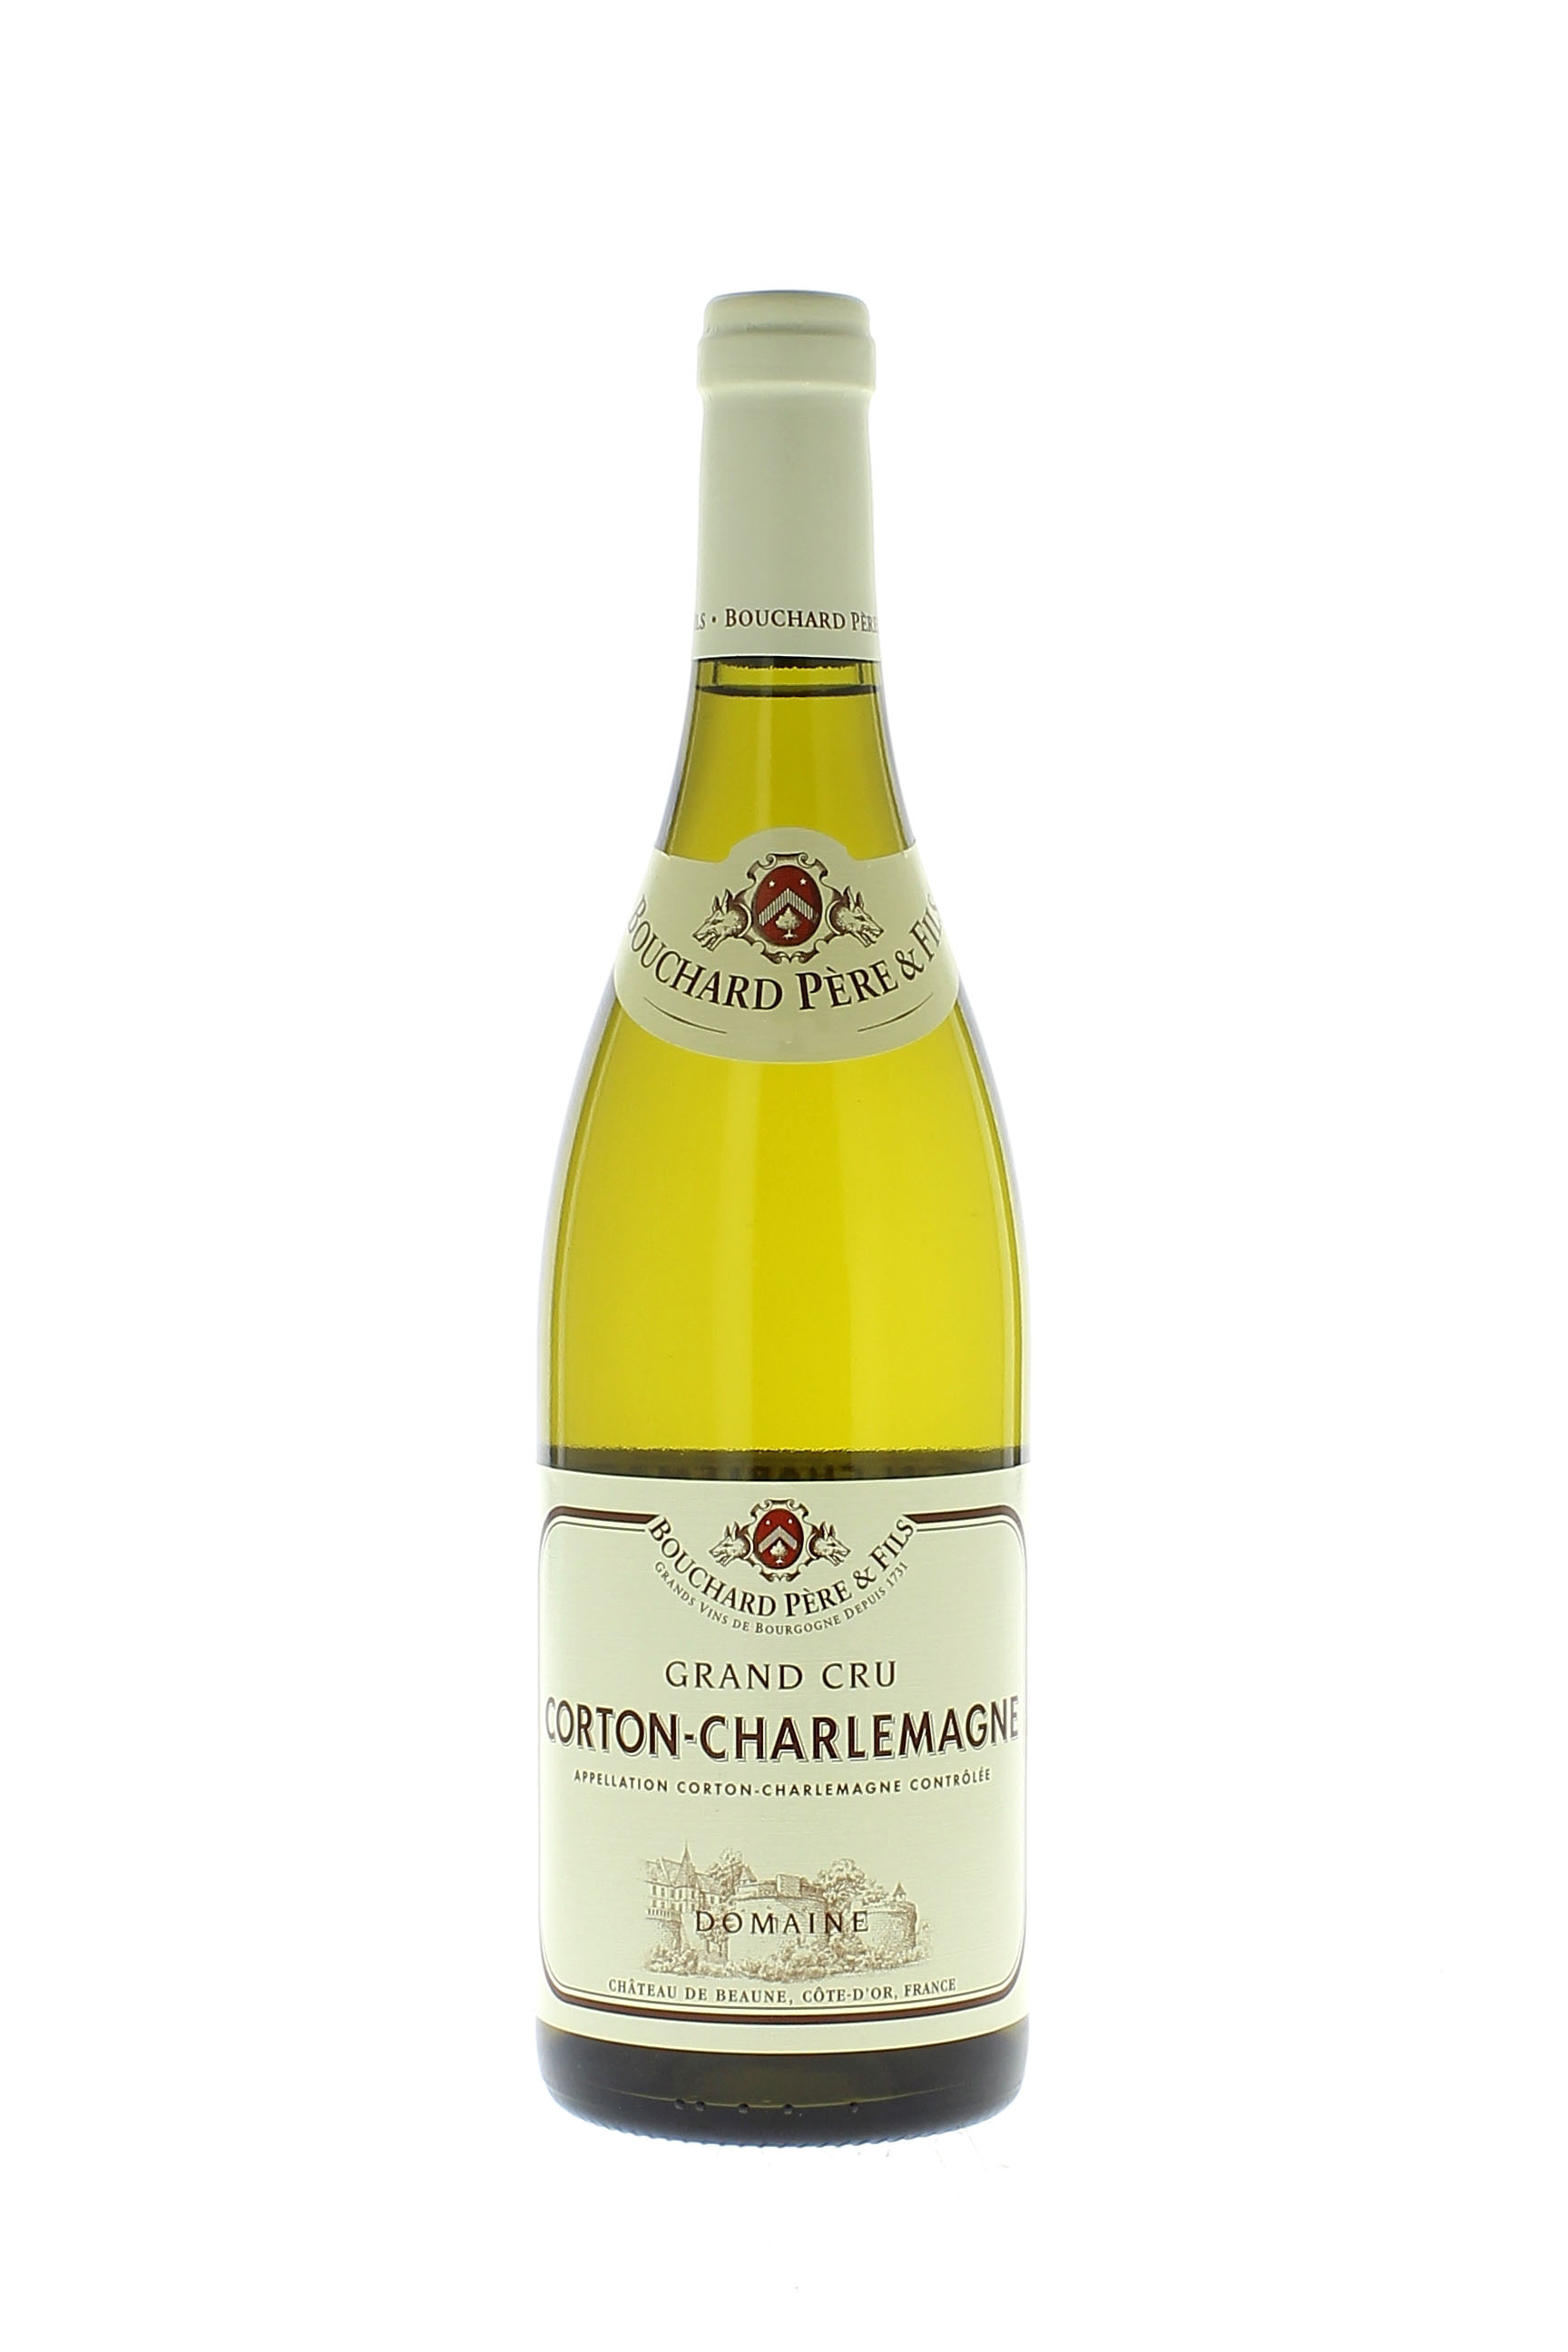 Corton charlemagne 2000  BOUCHARD Pre et fils, Bourgogne blanc